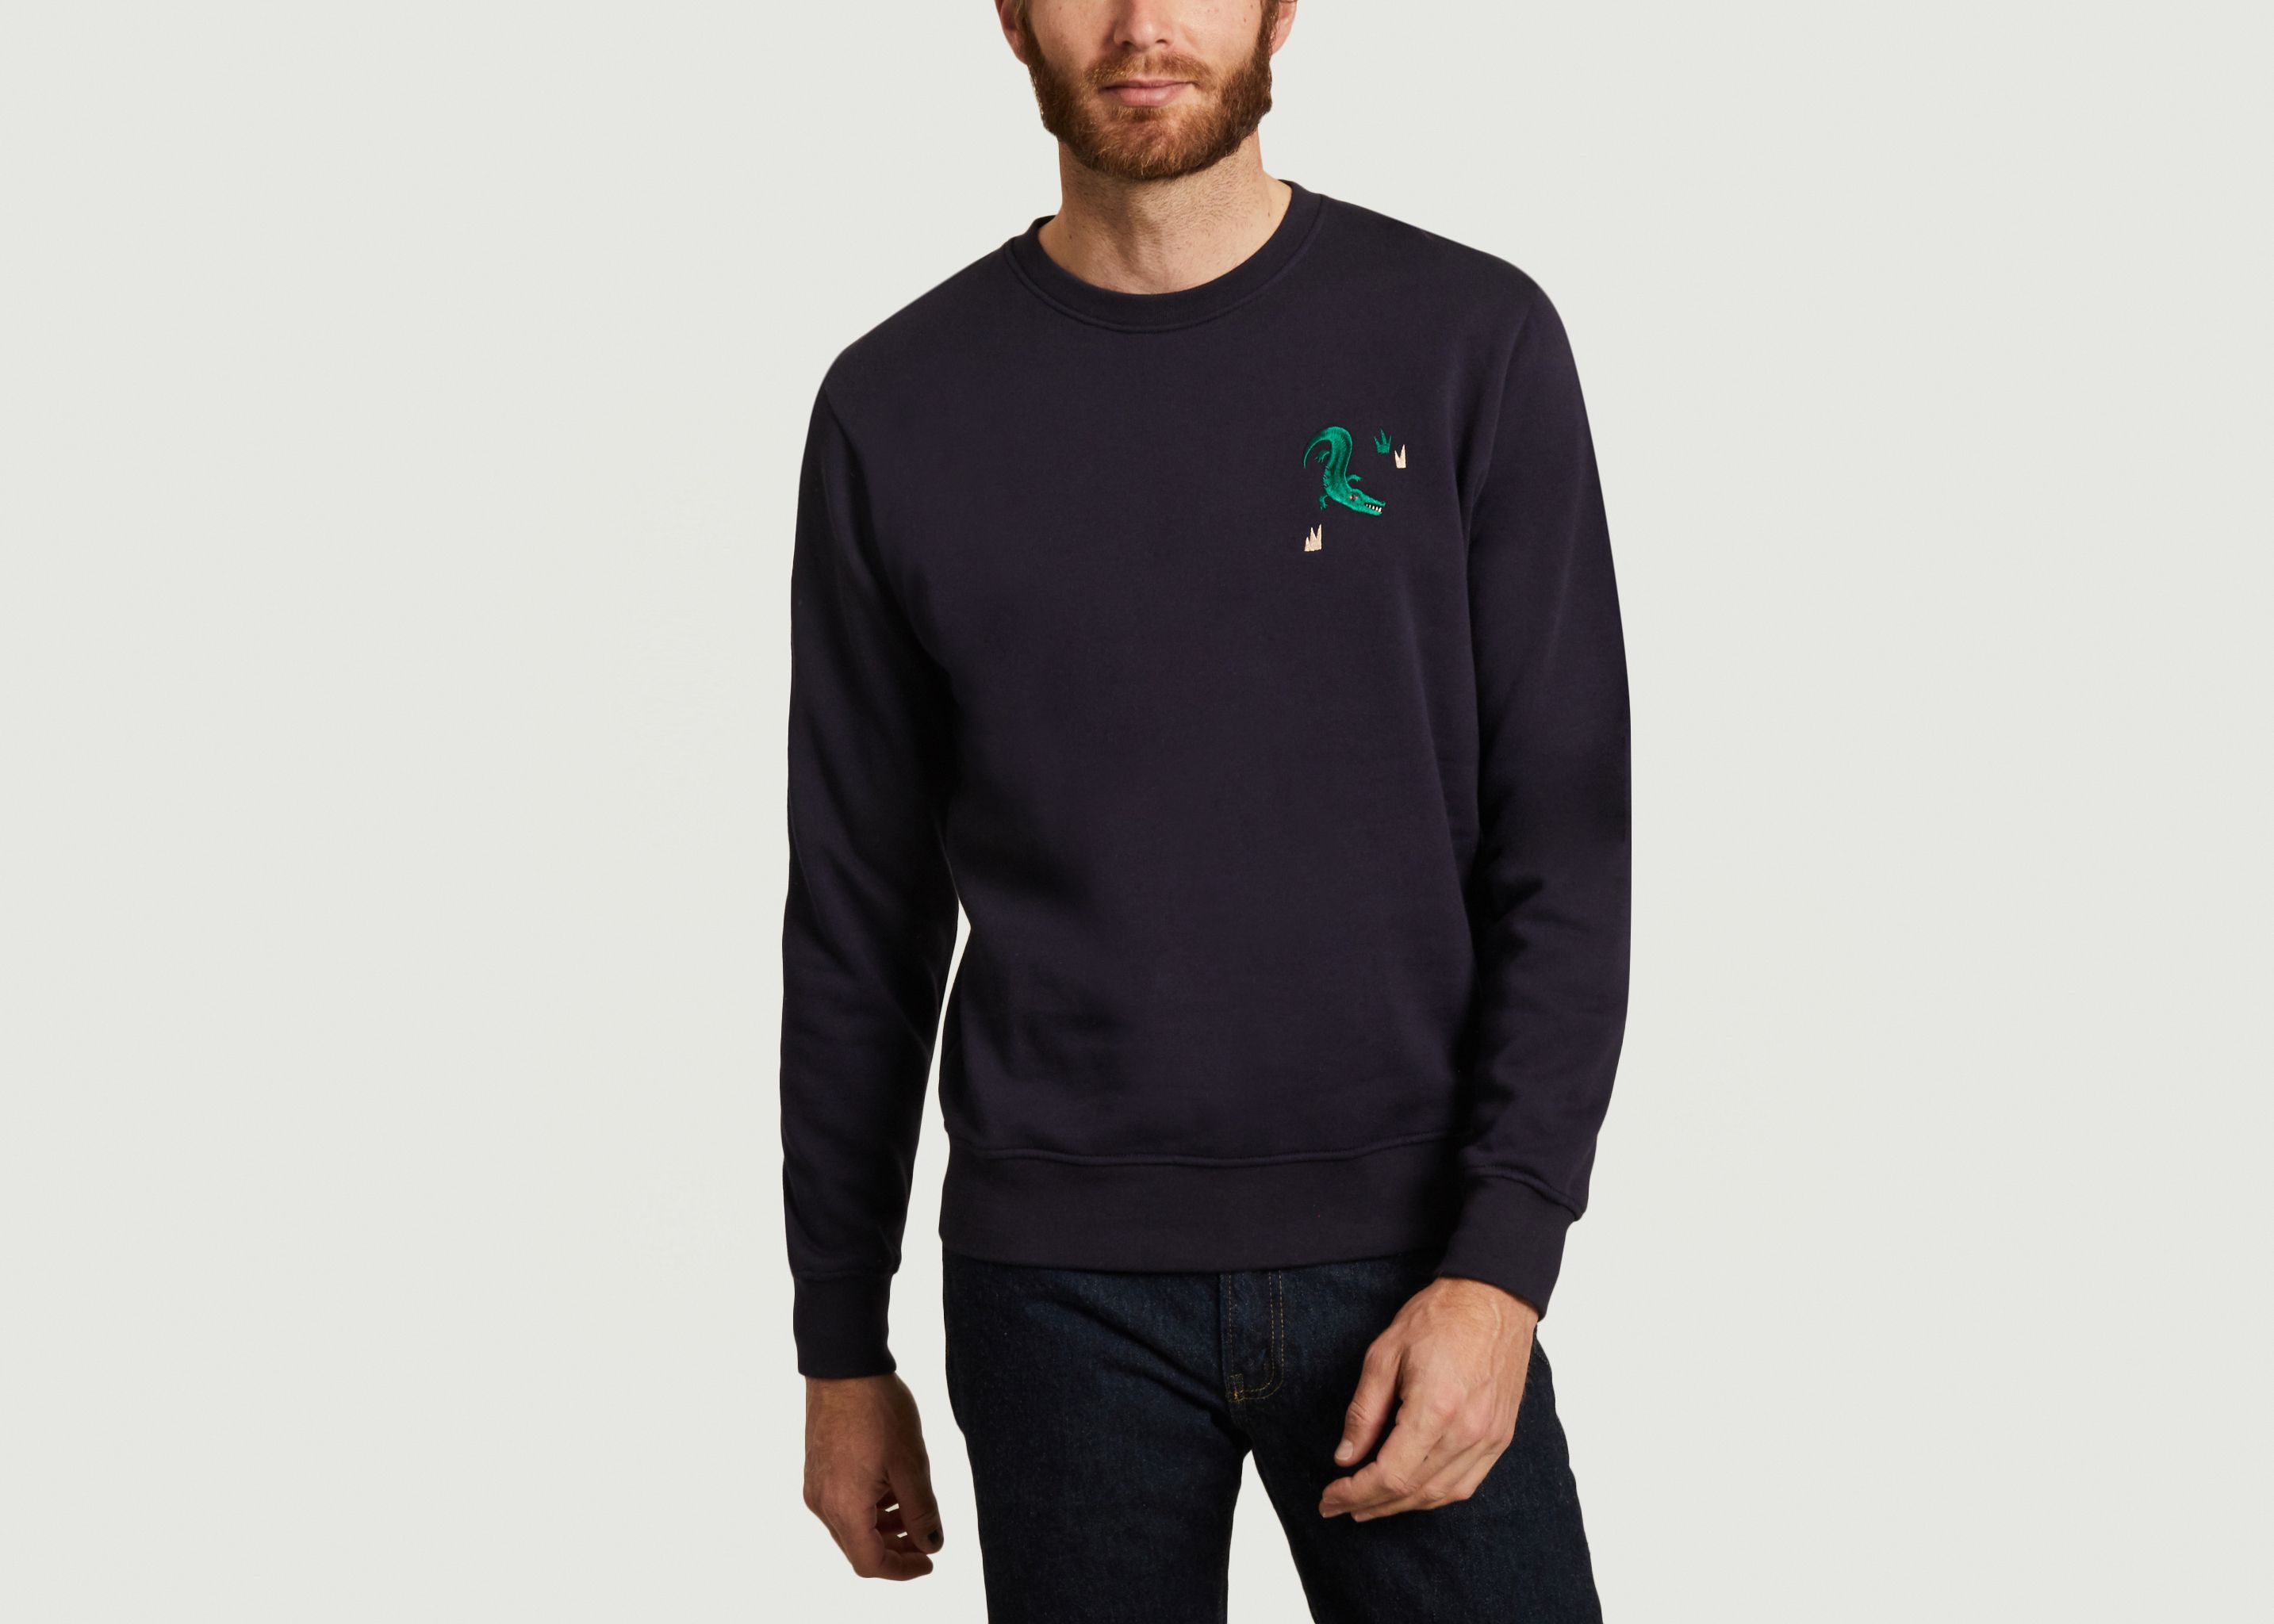 Crococo organic cotton embroidered sweatshirt - Olow